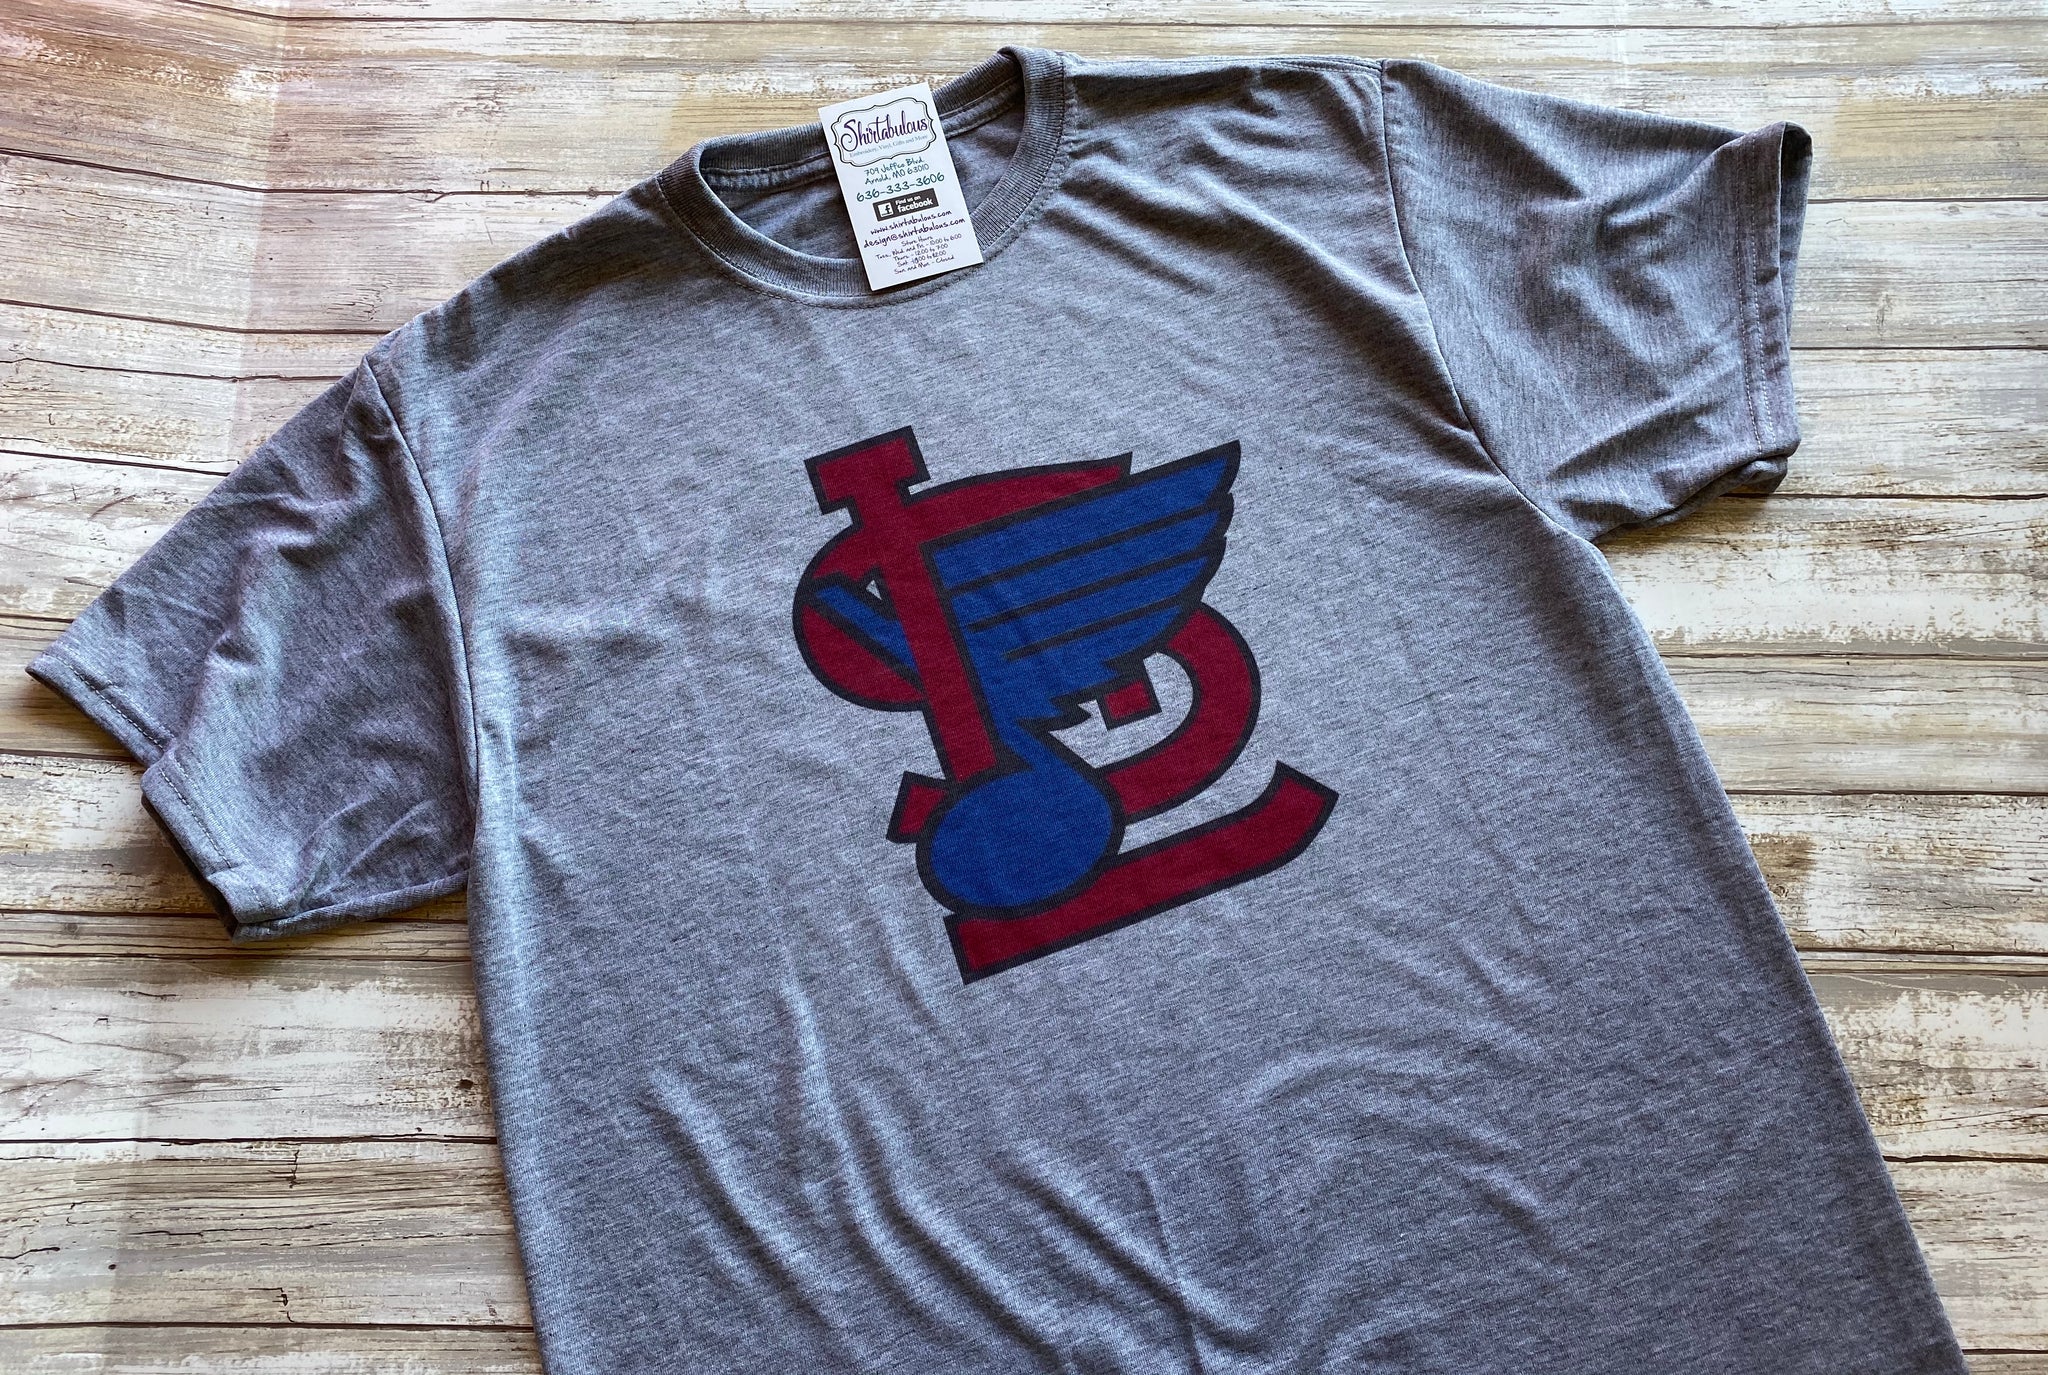 STL Cardinals and Blues T-Shirt